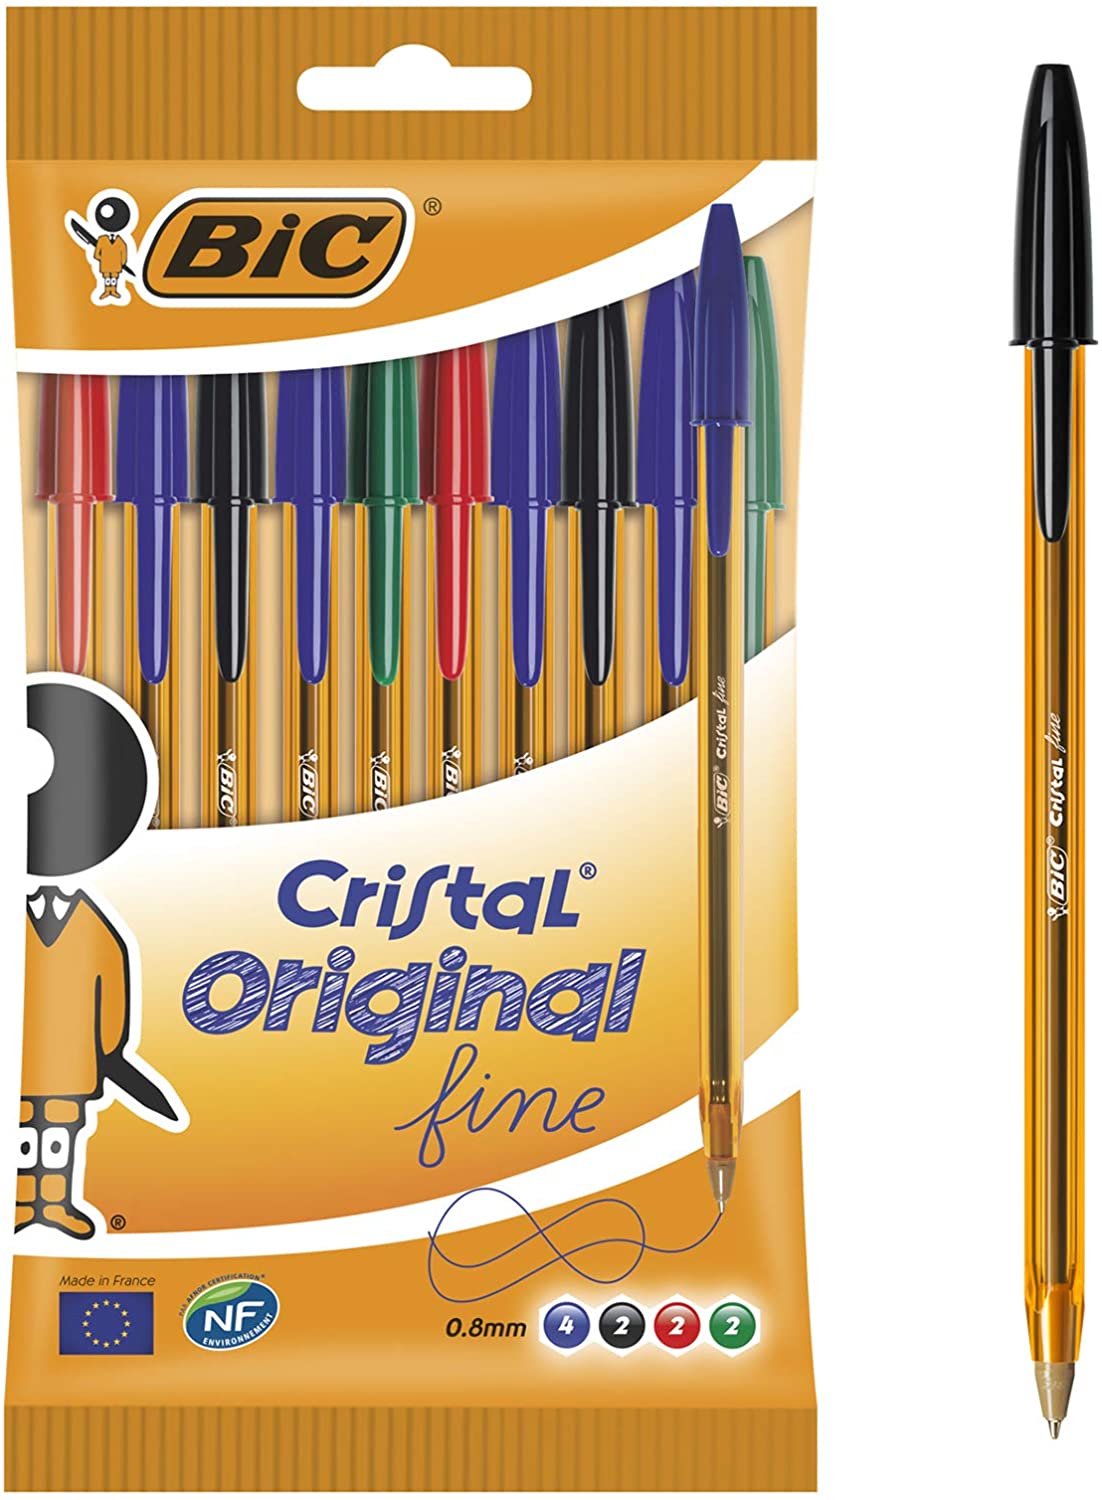 Bic Cristal Original Fine Pack de 10 Boligrafos de Bola - Punta Redonda de 0.8mm - Trazo de 0.30mm - Tinta con Base de Aceite - Translucido - Colores Surtidos